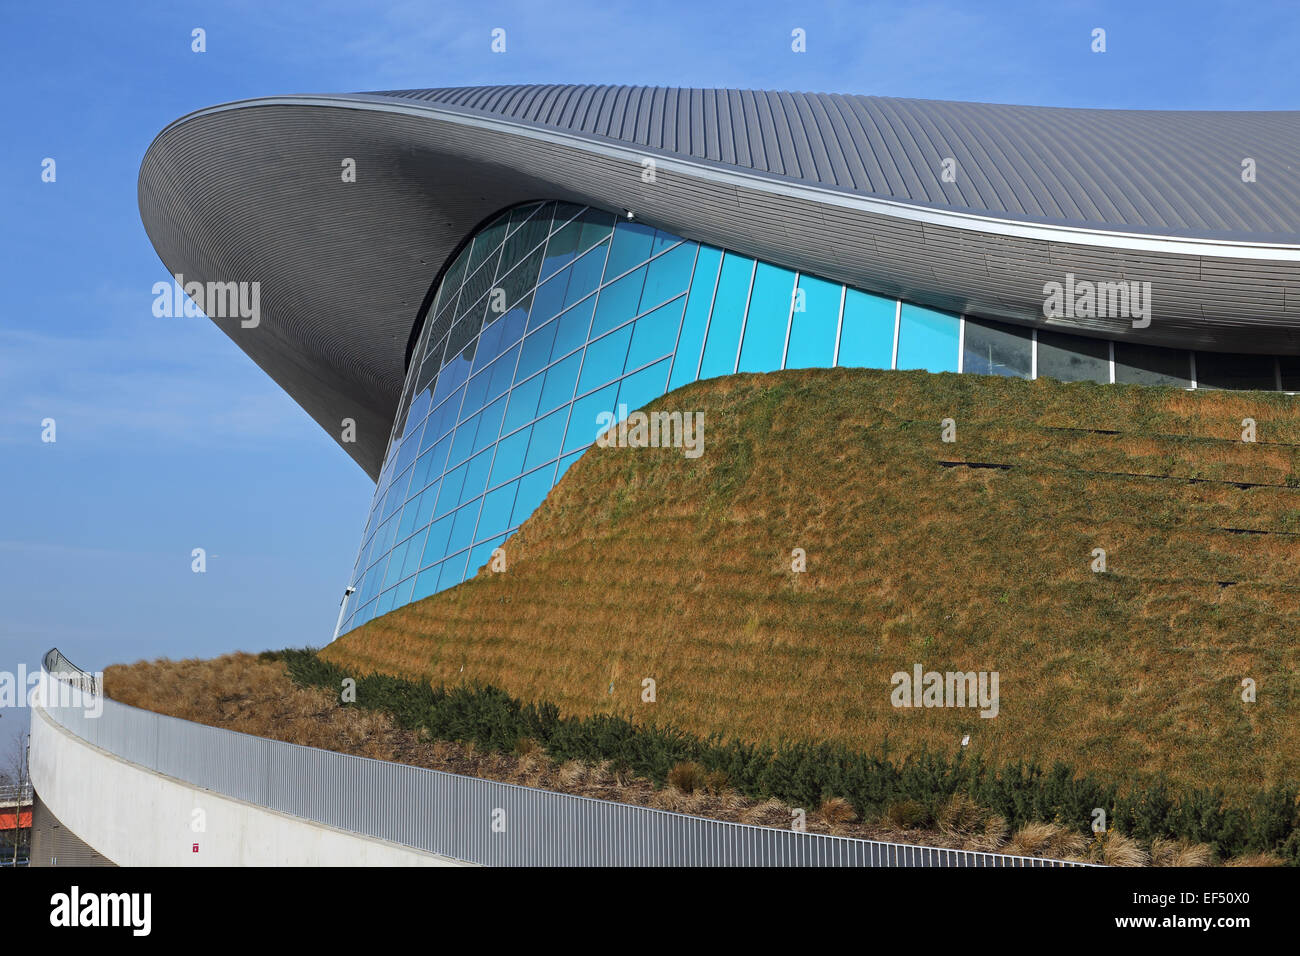 London Olympic Aquatic Center zeigt lebendige grass Dach, Dach aus Beton-Struktur und Verglasung. Temporäre Sitzplätze Flügel entfernt. Stockfoto